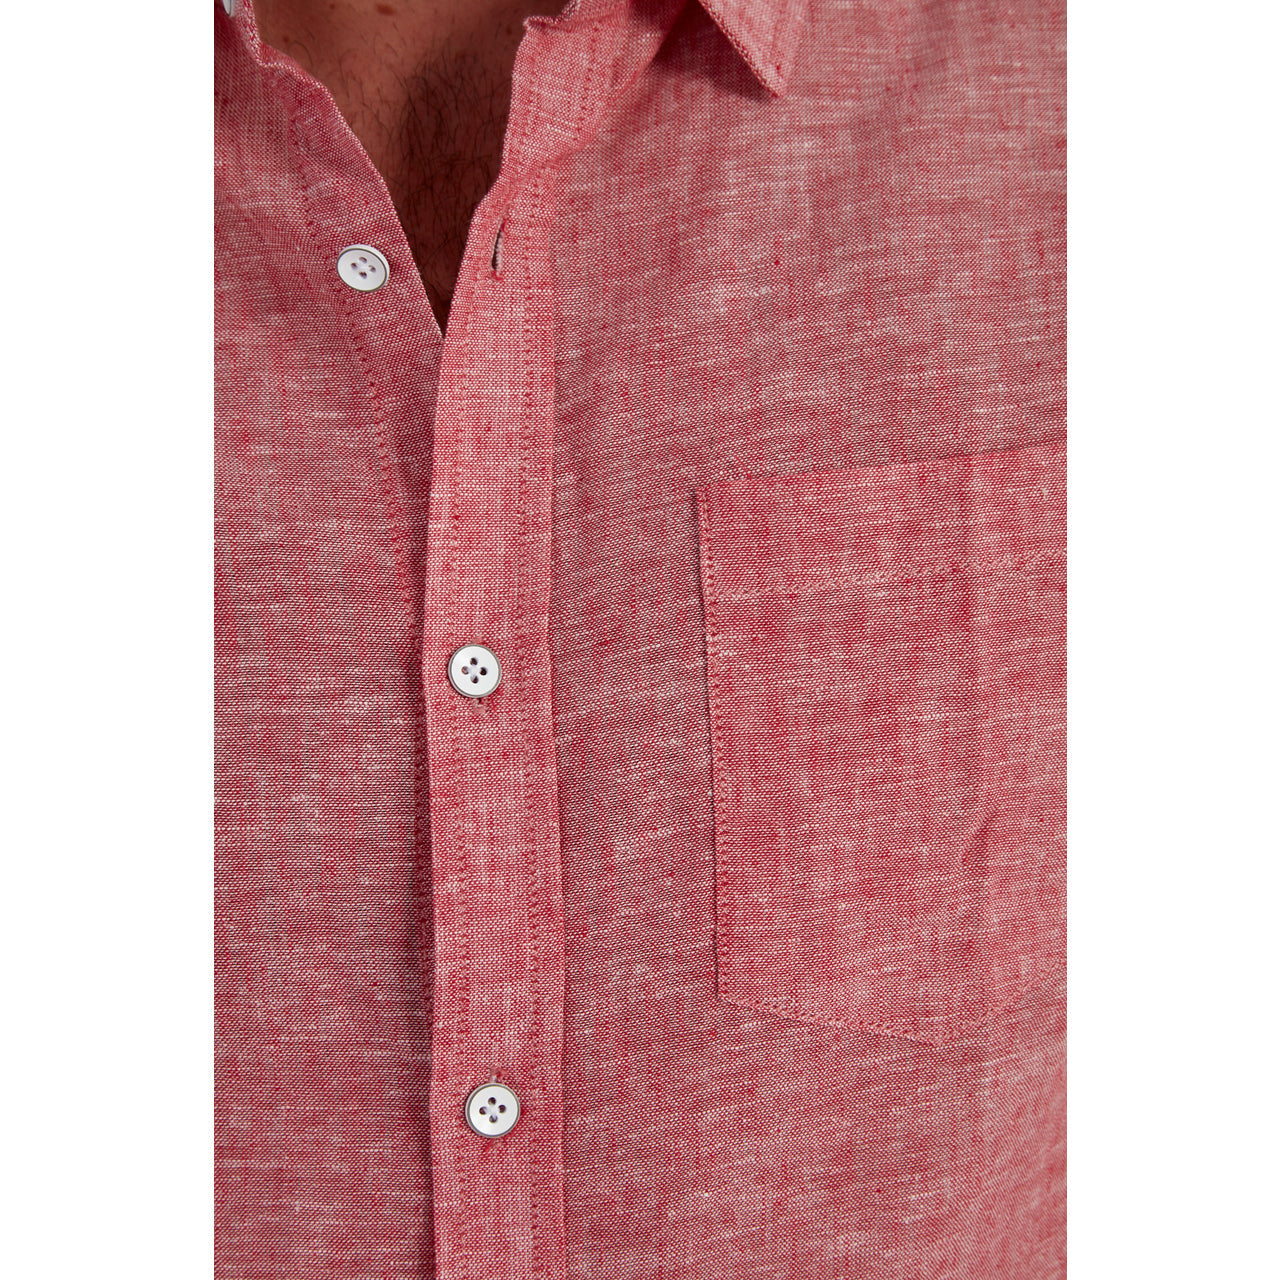 Men's Red Button Up Cotton Short Sleeve Shirt close up of buttons